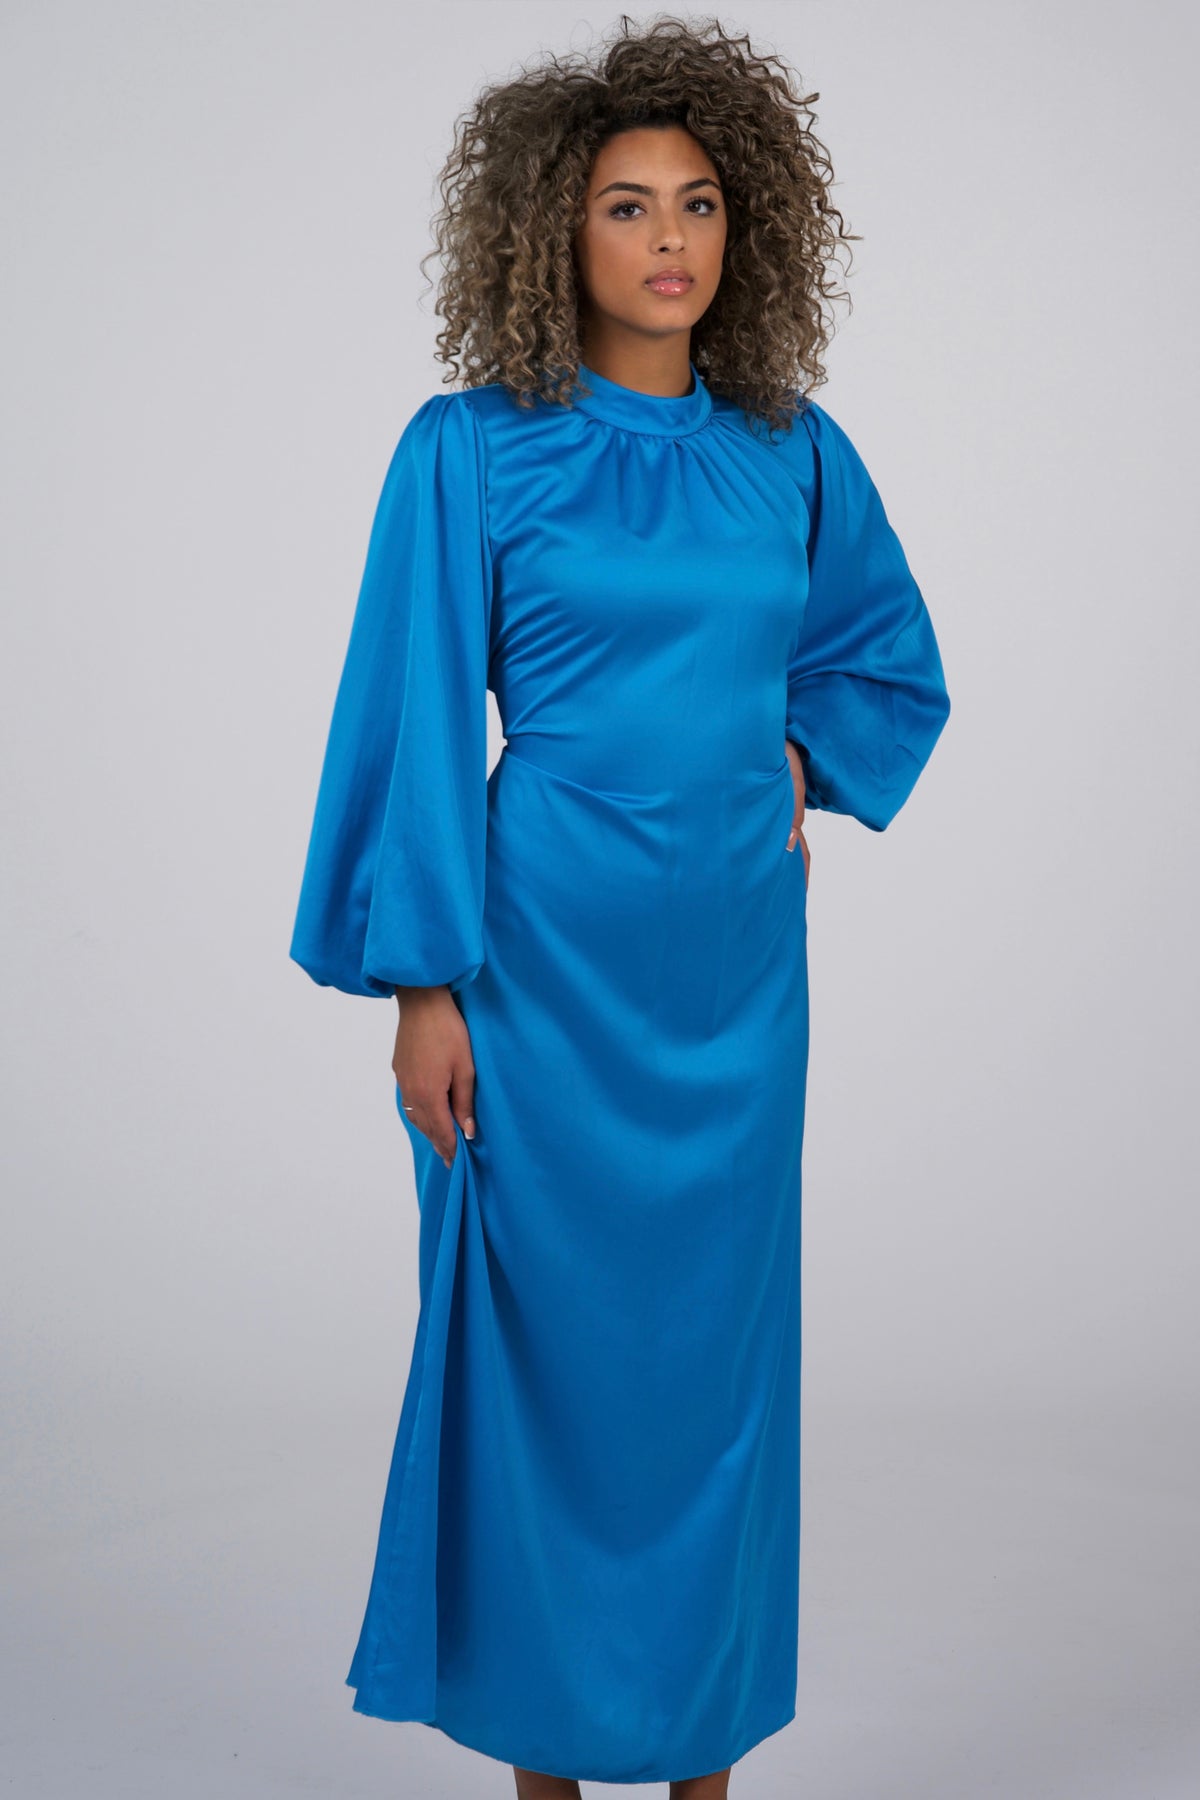 Aqua Long Dress With Puffed Sleeves